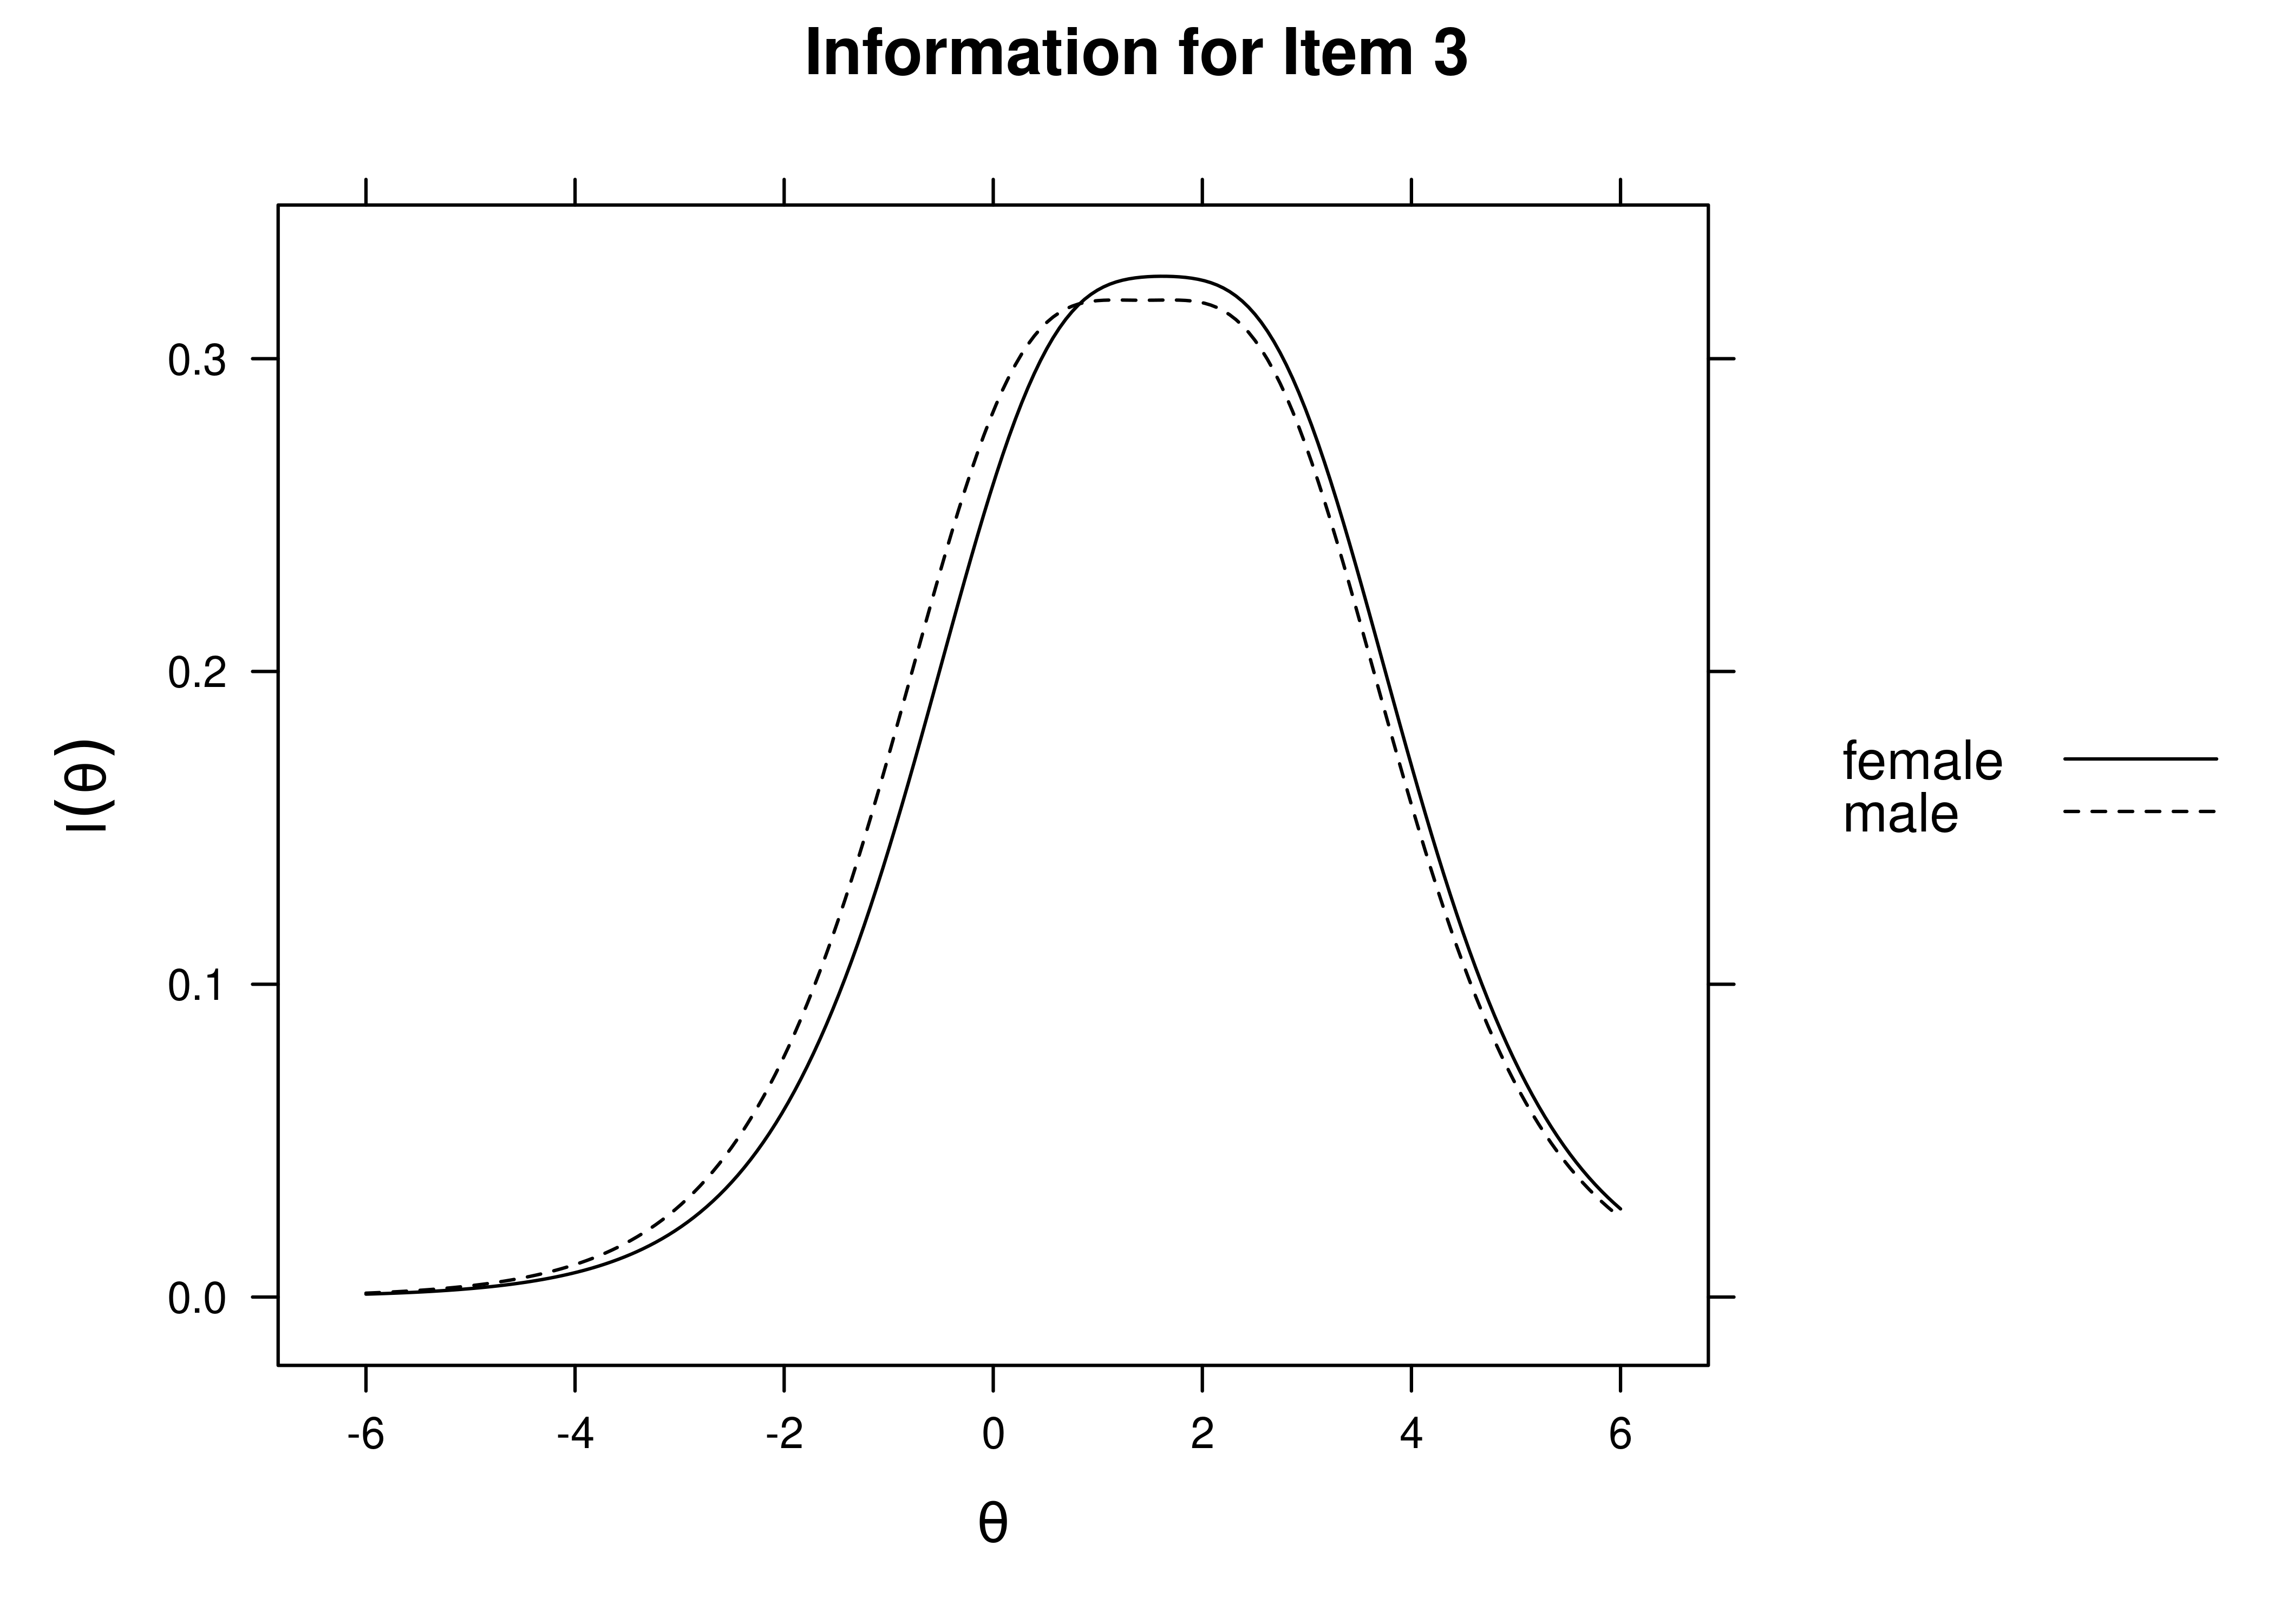 Item Information Curves by Sex: Item 3.